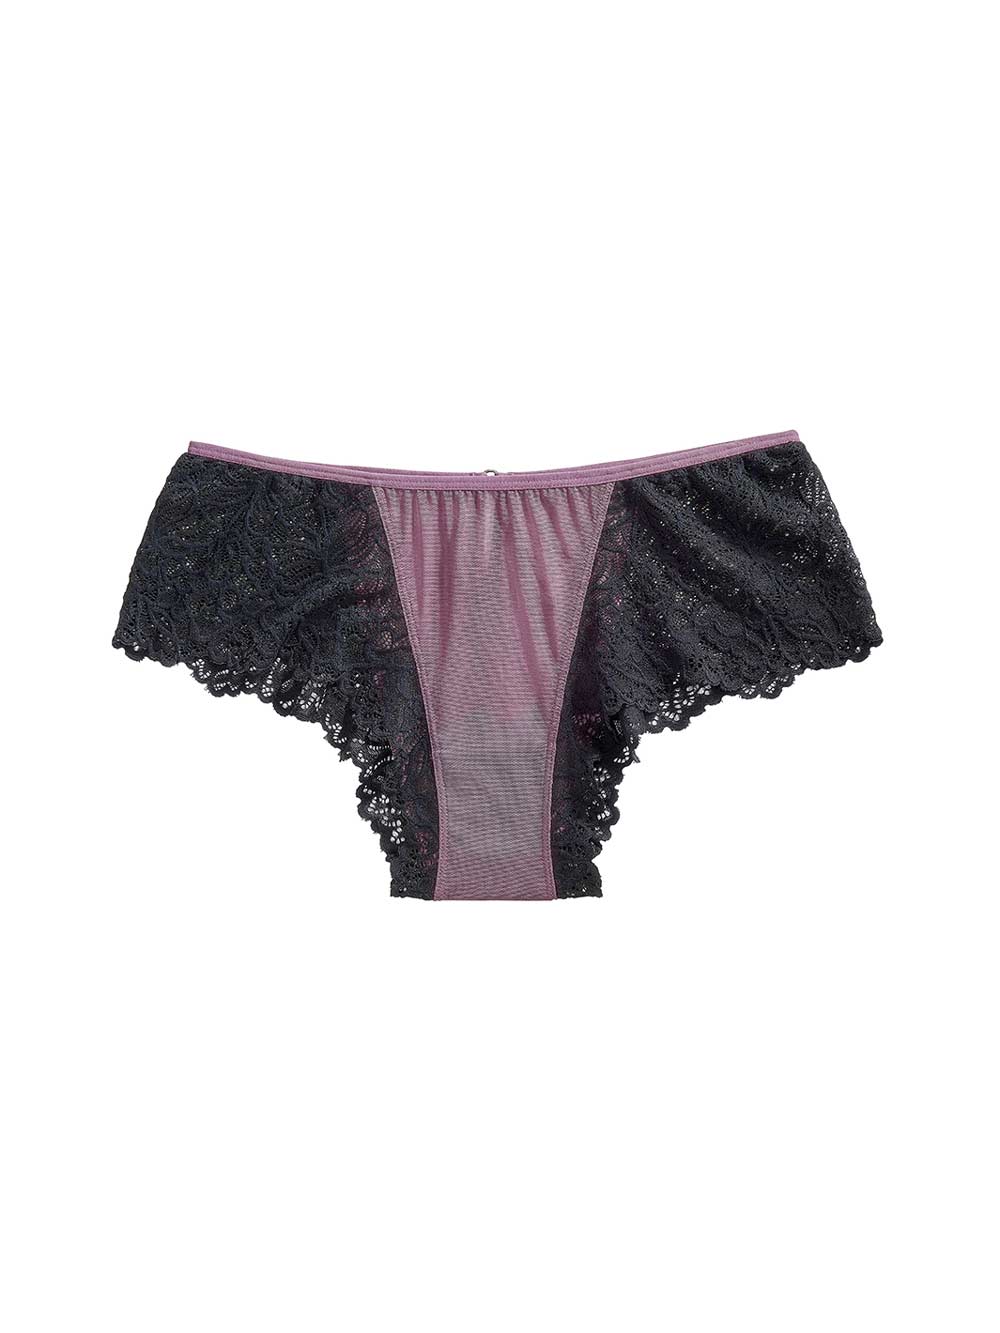 Arielle Cotton Crotch Panty